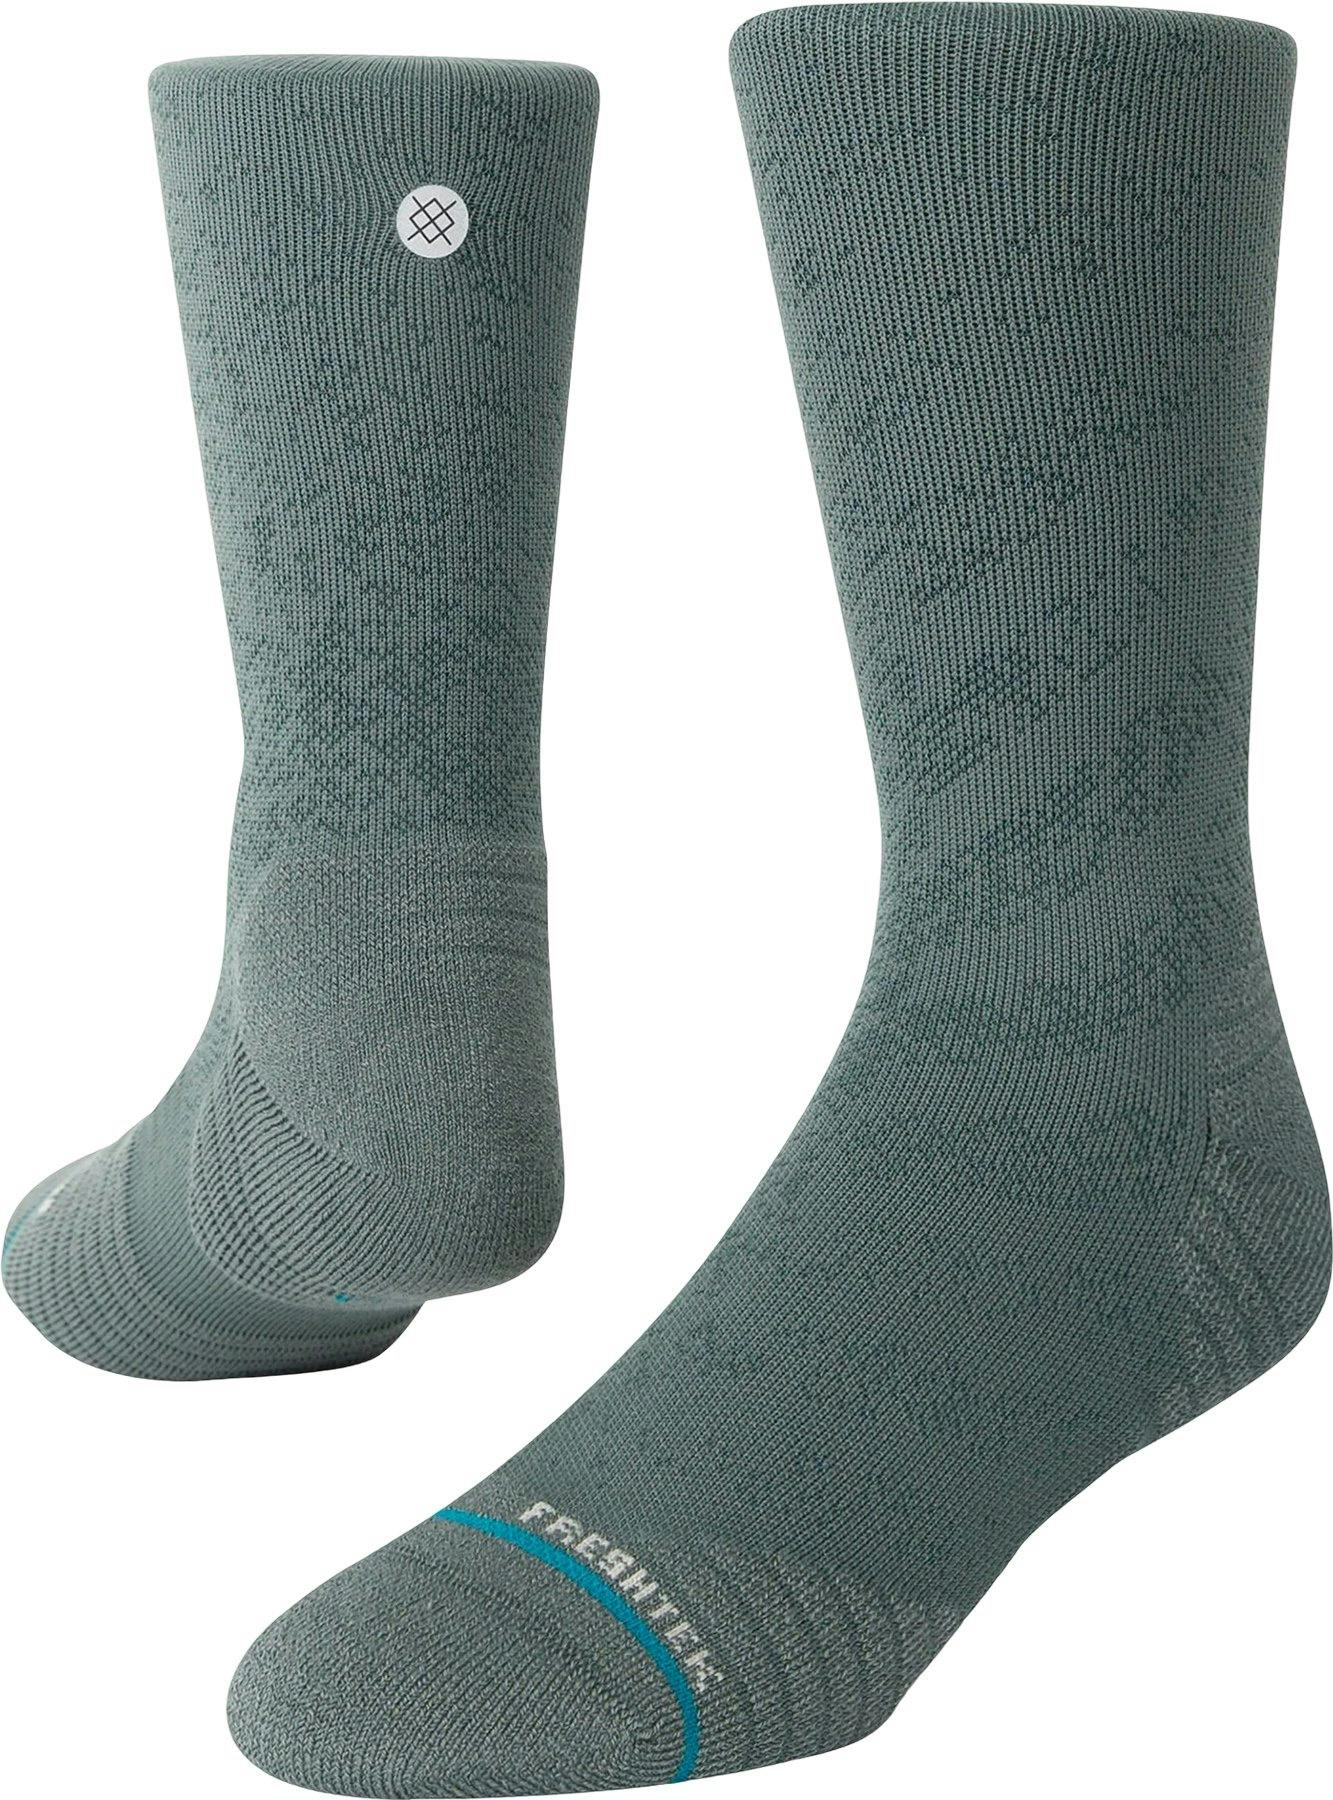 Product image for Athletic Crew Socks - Unisex